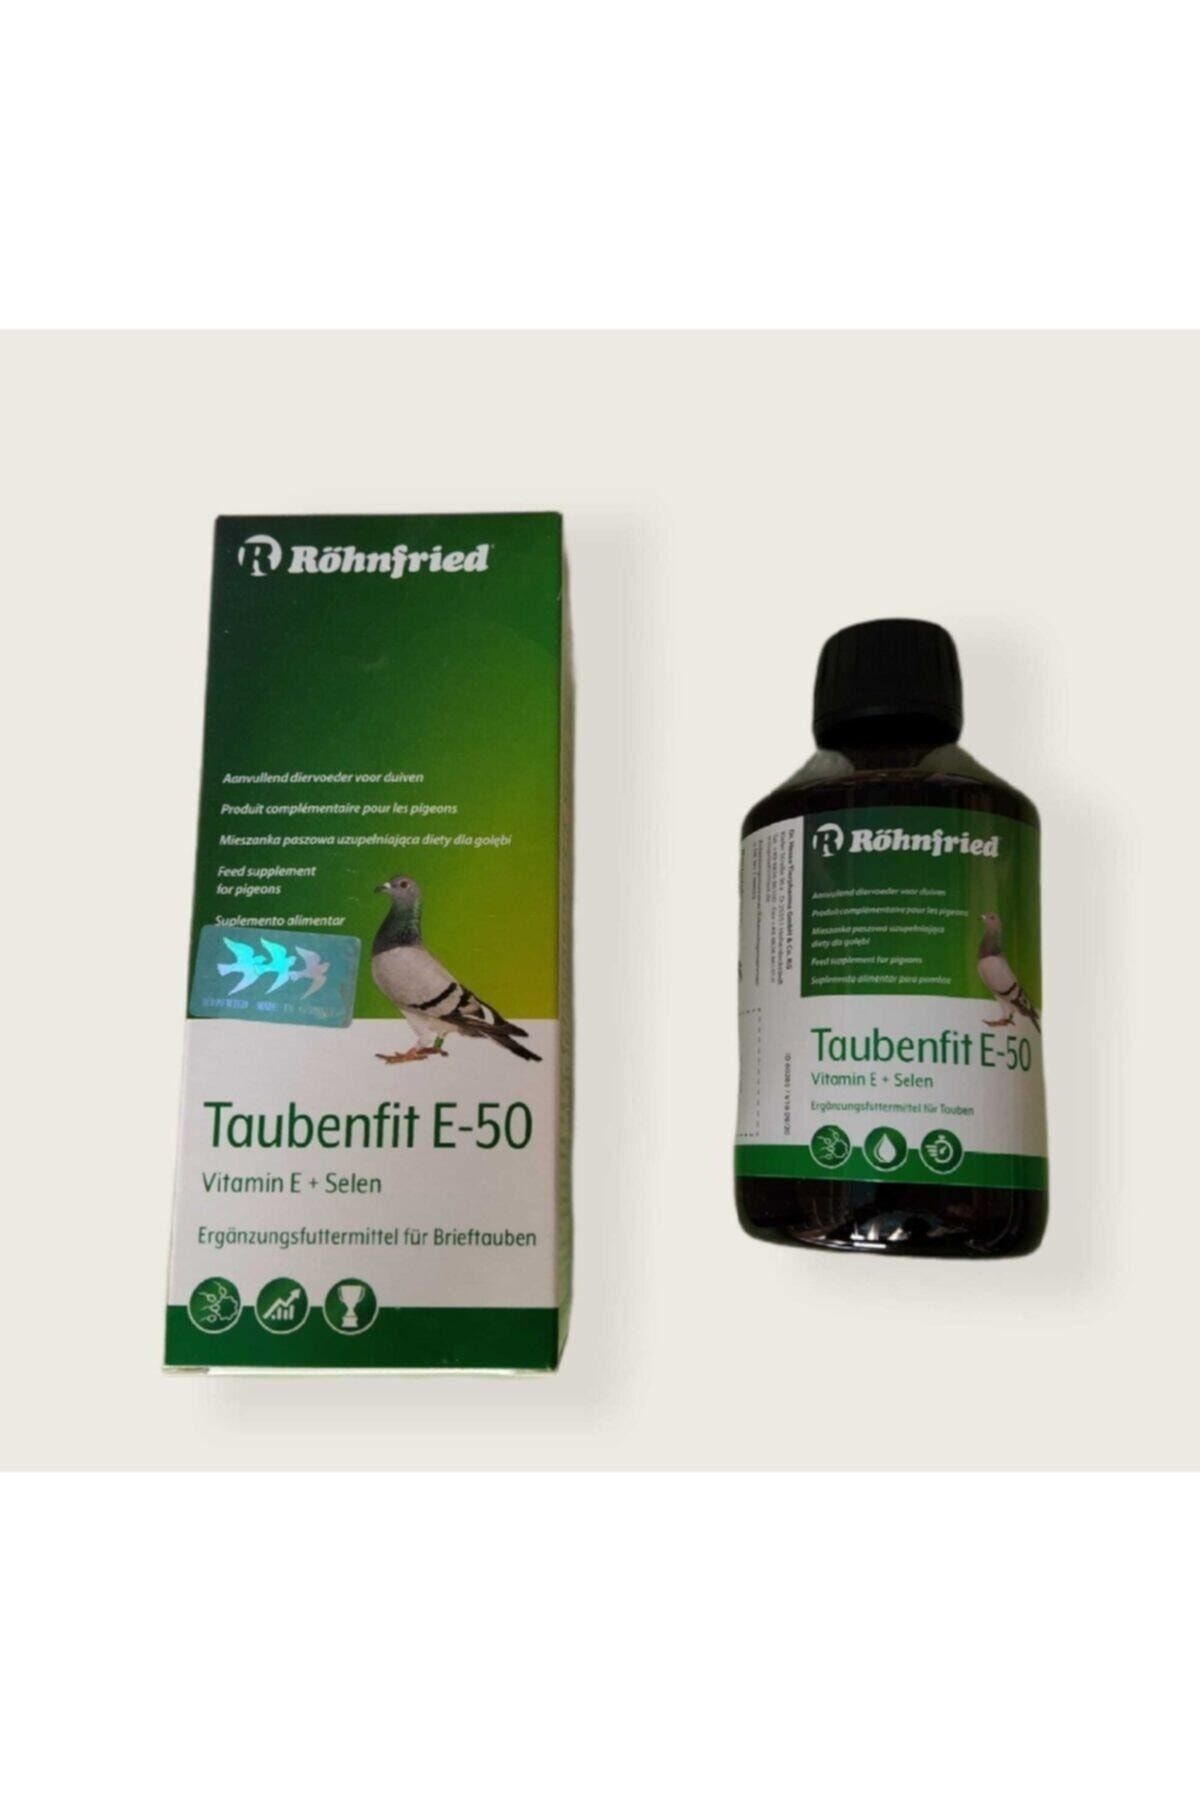 Röhnfried Taubenfit E-50 E Vitamini Selenyum 15ml (KIZIŞTIRICI)